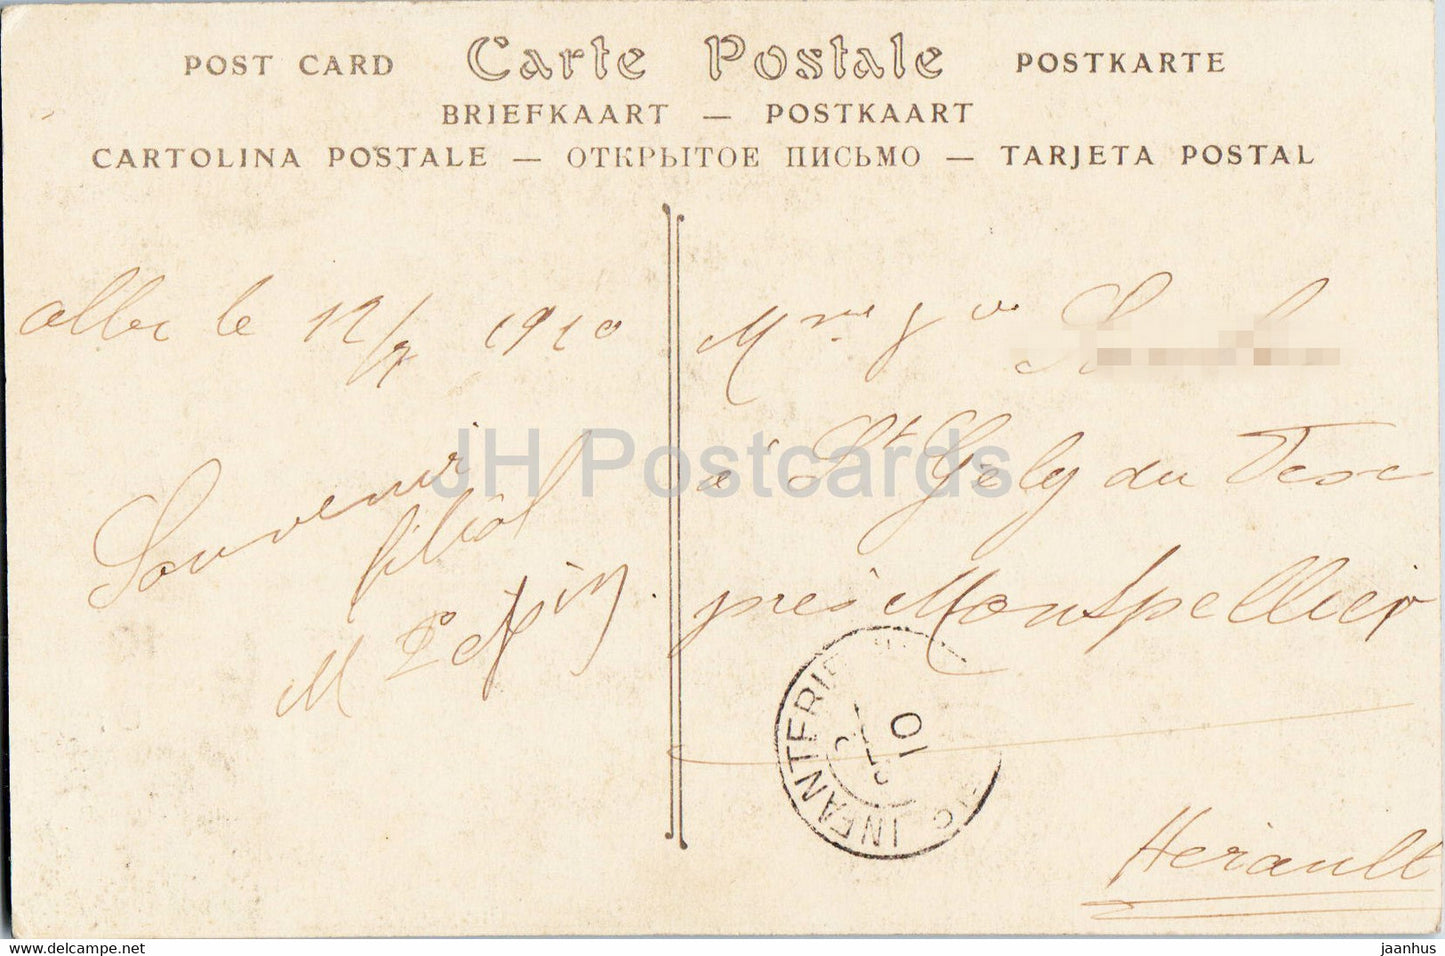 Albi - La Cathedrale les Orgues - Kathedrale - alte Postkarte - 1910 - Frankreich - gebraucht